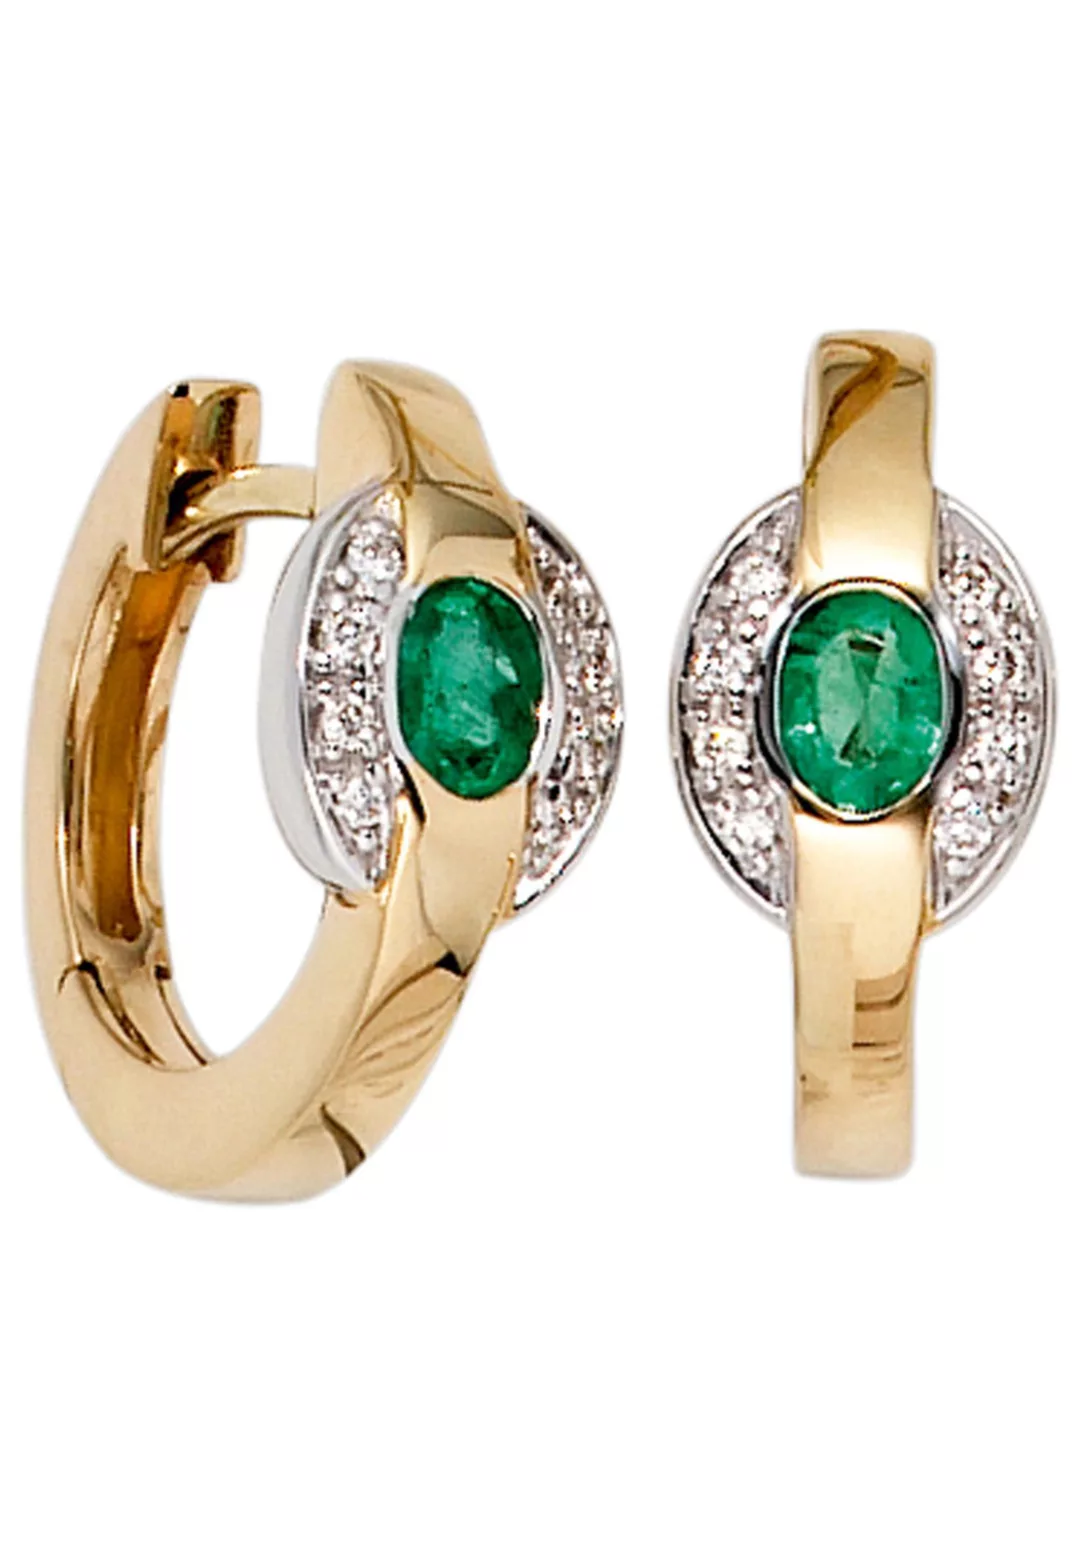 JOBO Paar Creolen, 585 Gold bicolor mit 16 Diamanten und Smaragd günstig online kaufen